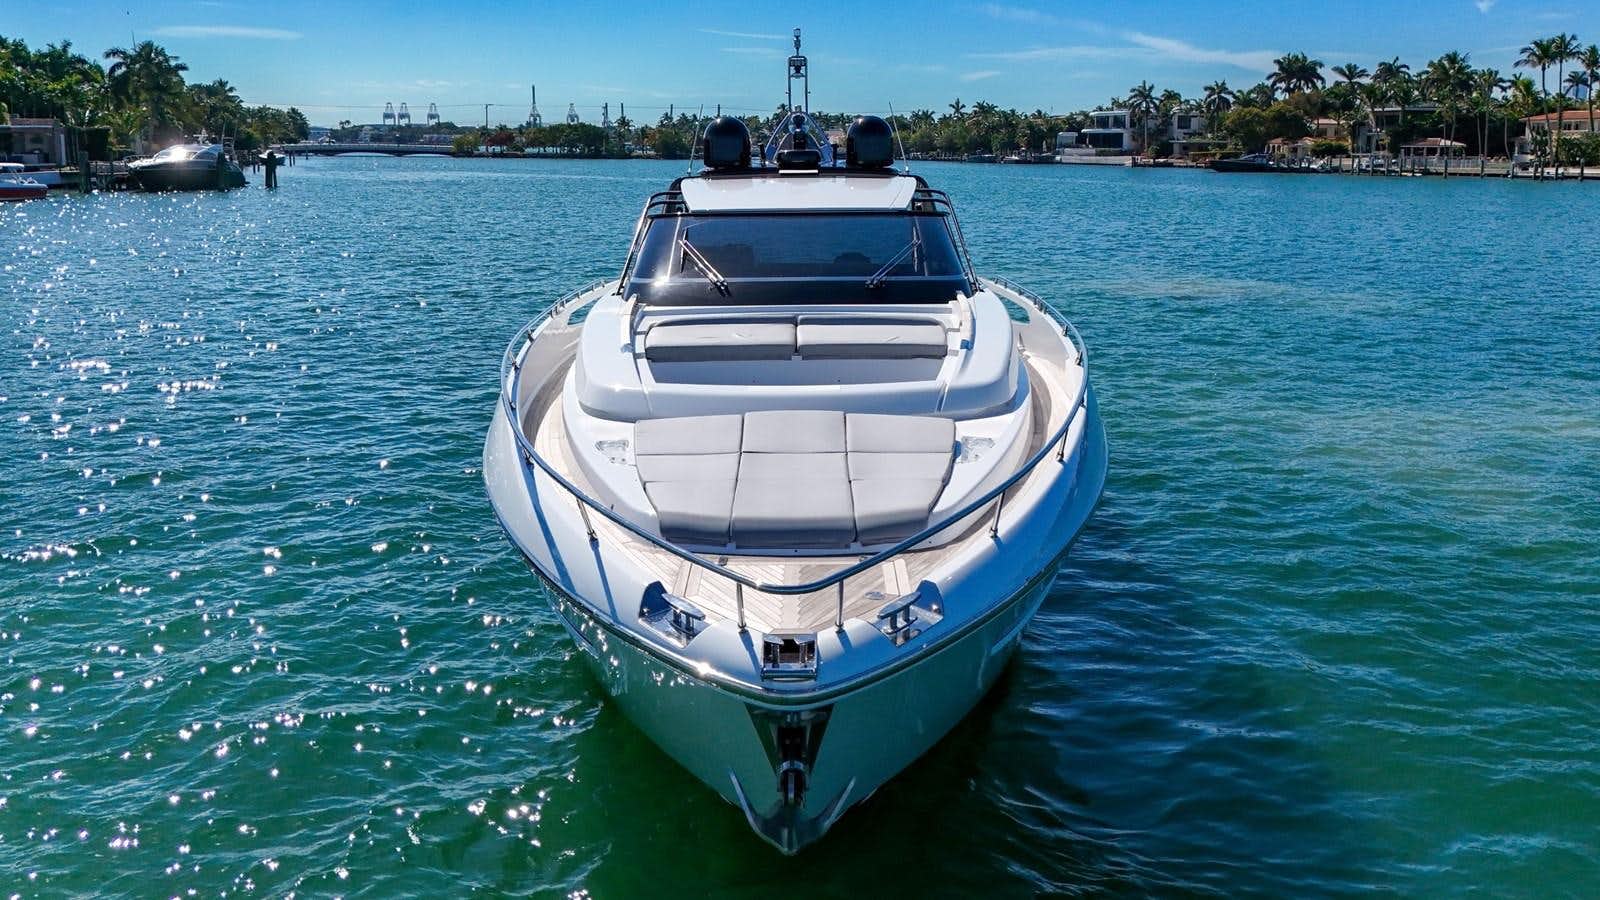 Riva 76' bahamas
Yacht for Sale